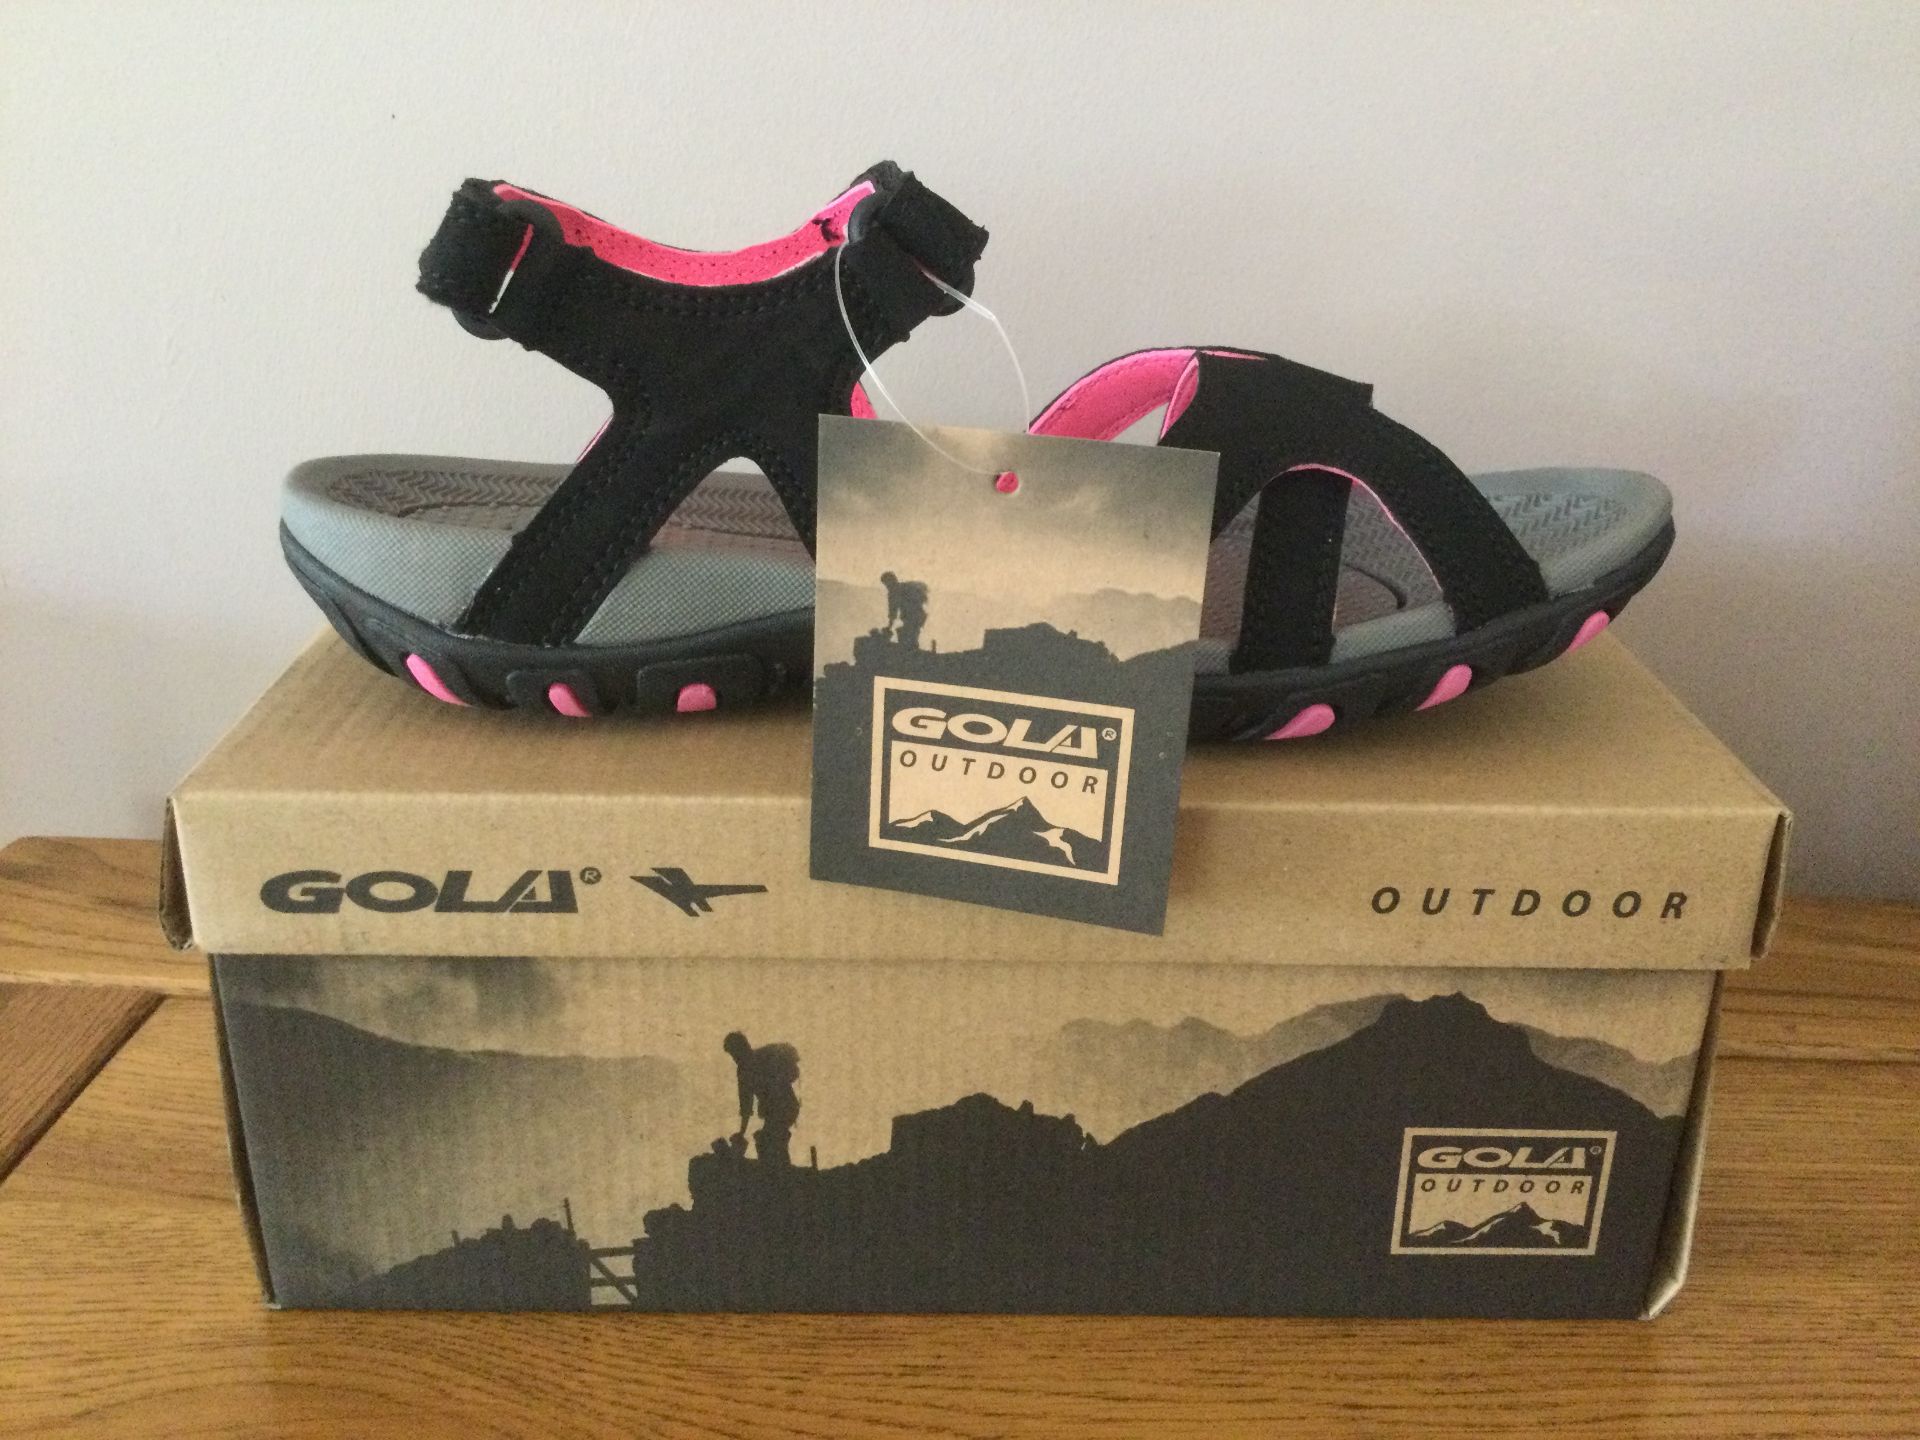 Gola Women's “Cedar” Hiking Sandals, Black/Hot Pink, Size 5 - Brand New - Image 2 of 4